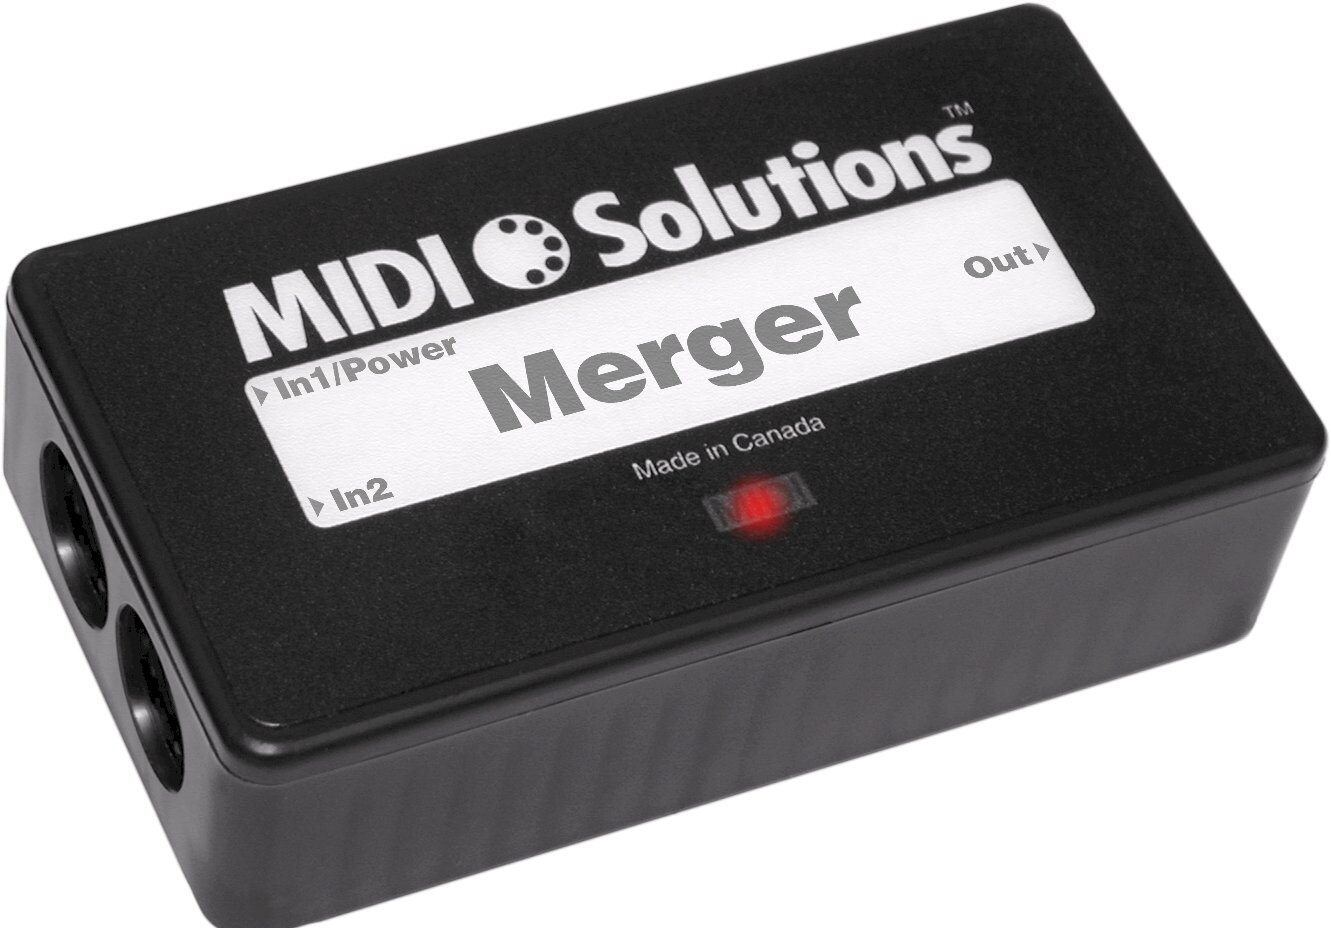 Midi Solution Merger : photo 1